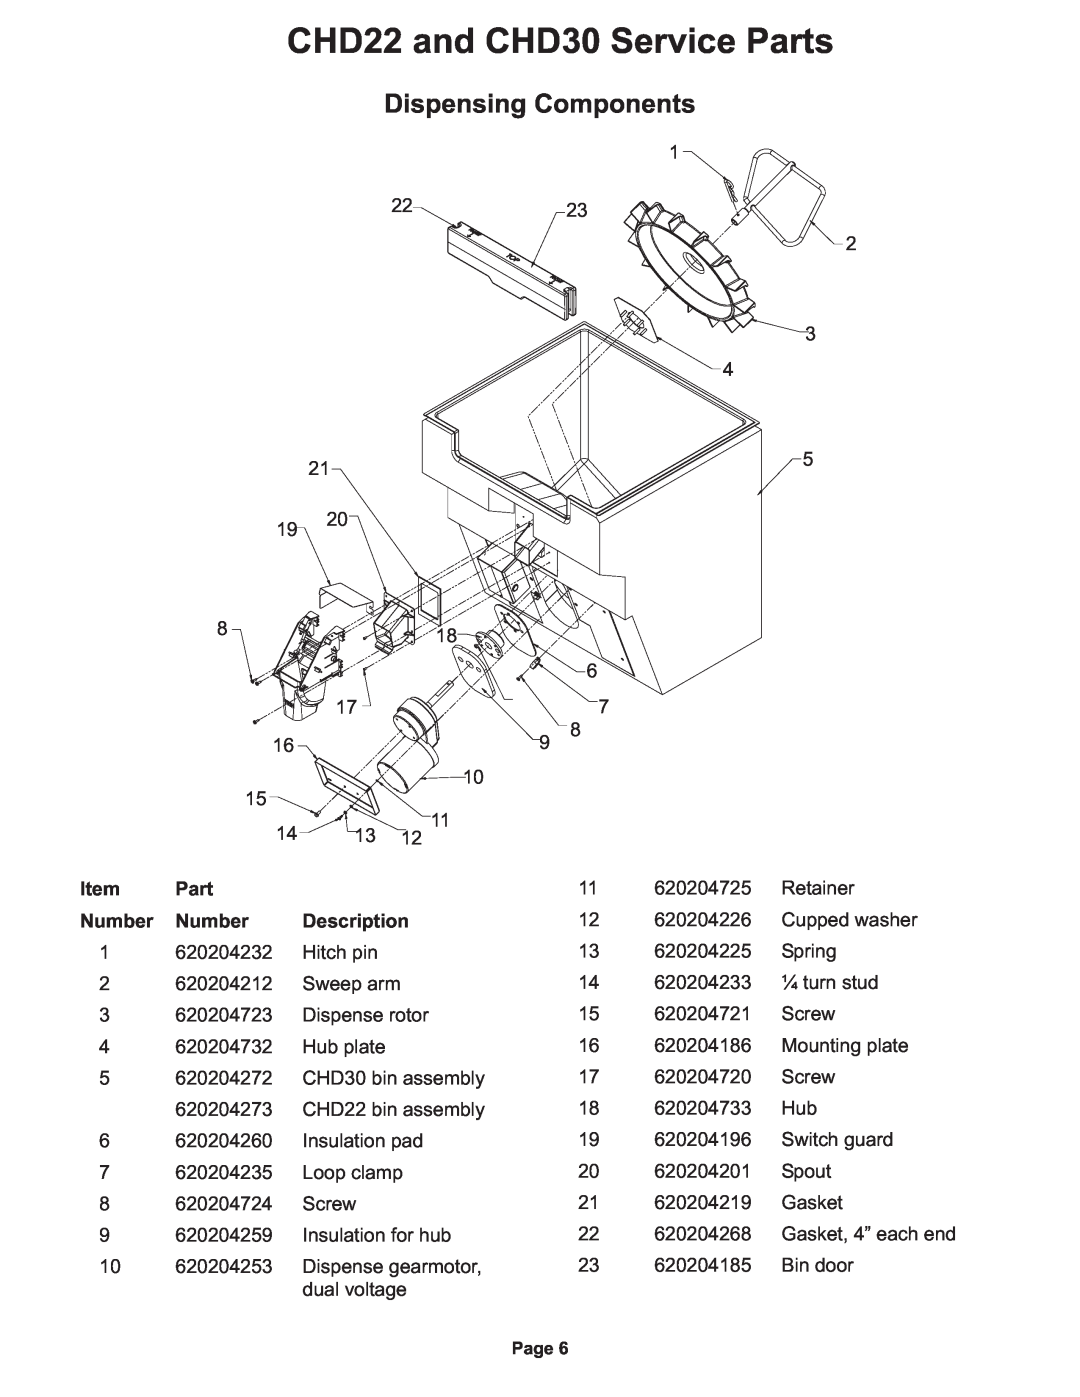 Cornelius manual CHD22 and CHD30 Service Parts, Dispensing Components, Number, Description 